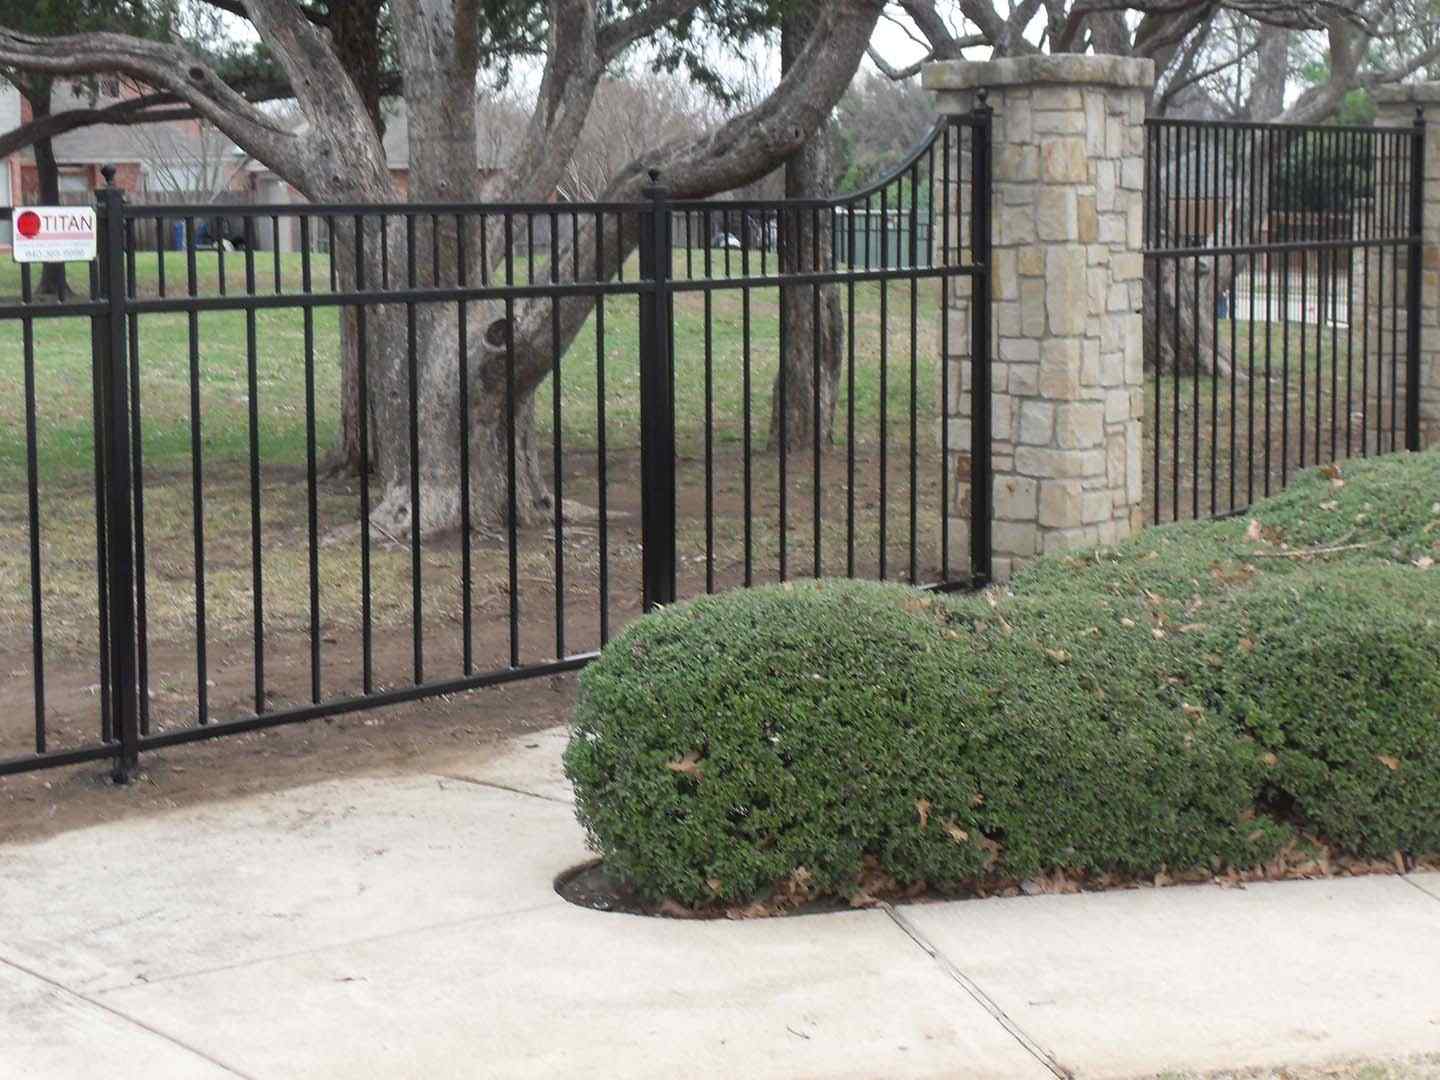 Ornamental Iron Fence in the Dallas Fort Worth Area